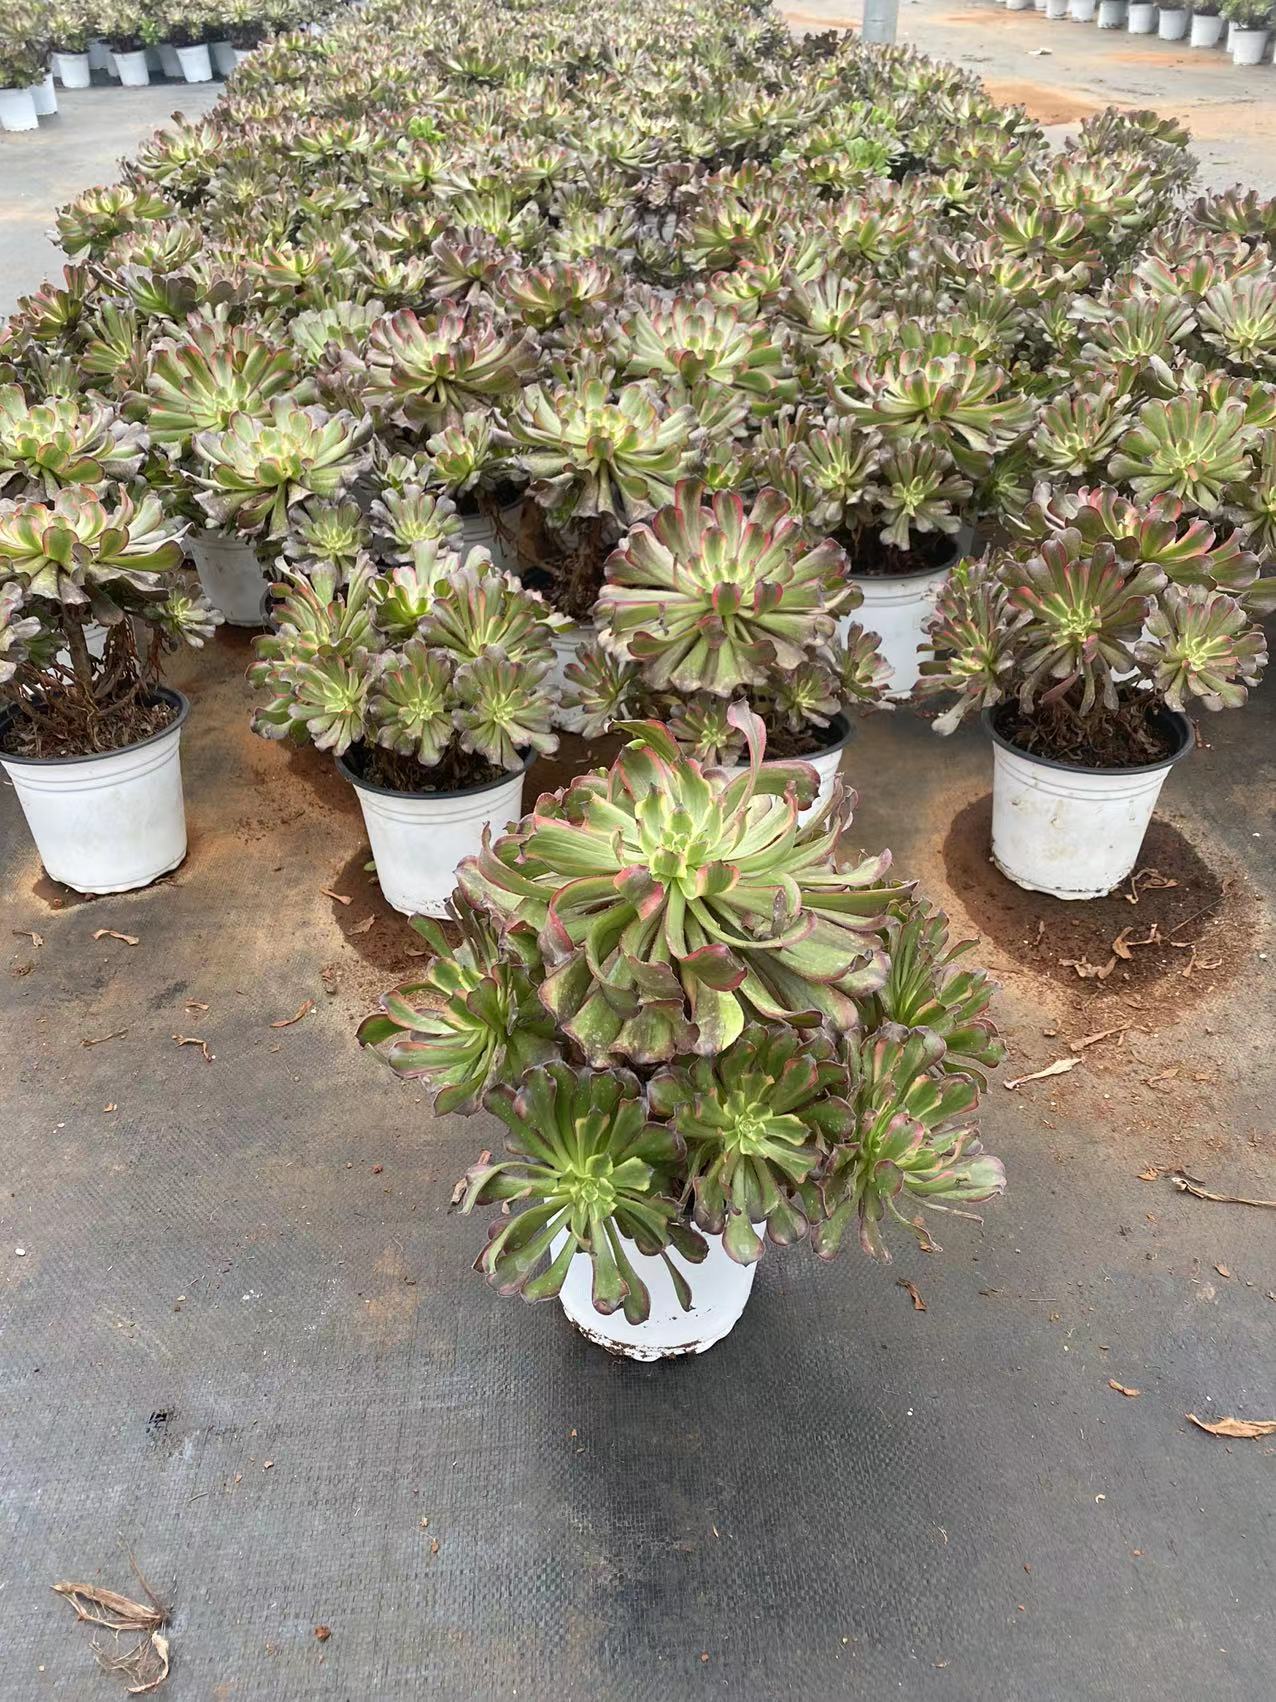 Fendai cluster20-25cm/ 8-15 heads/ Aeonium cluster/ Variegated Natural Live Plants Succulents